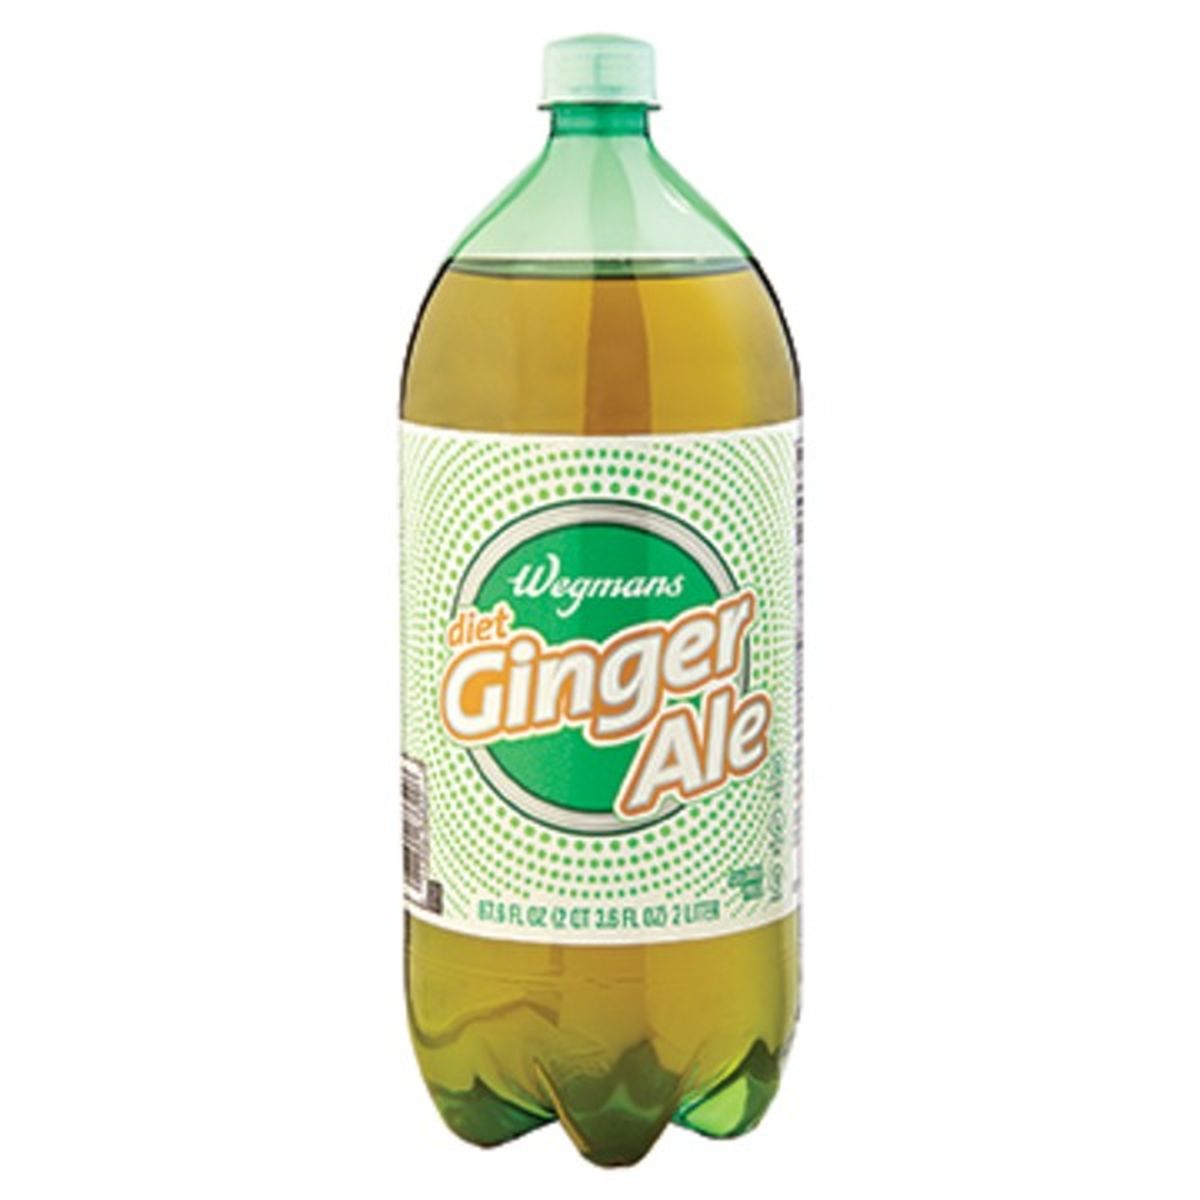 Calories in Wegmans Diet Ginger Ale